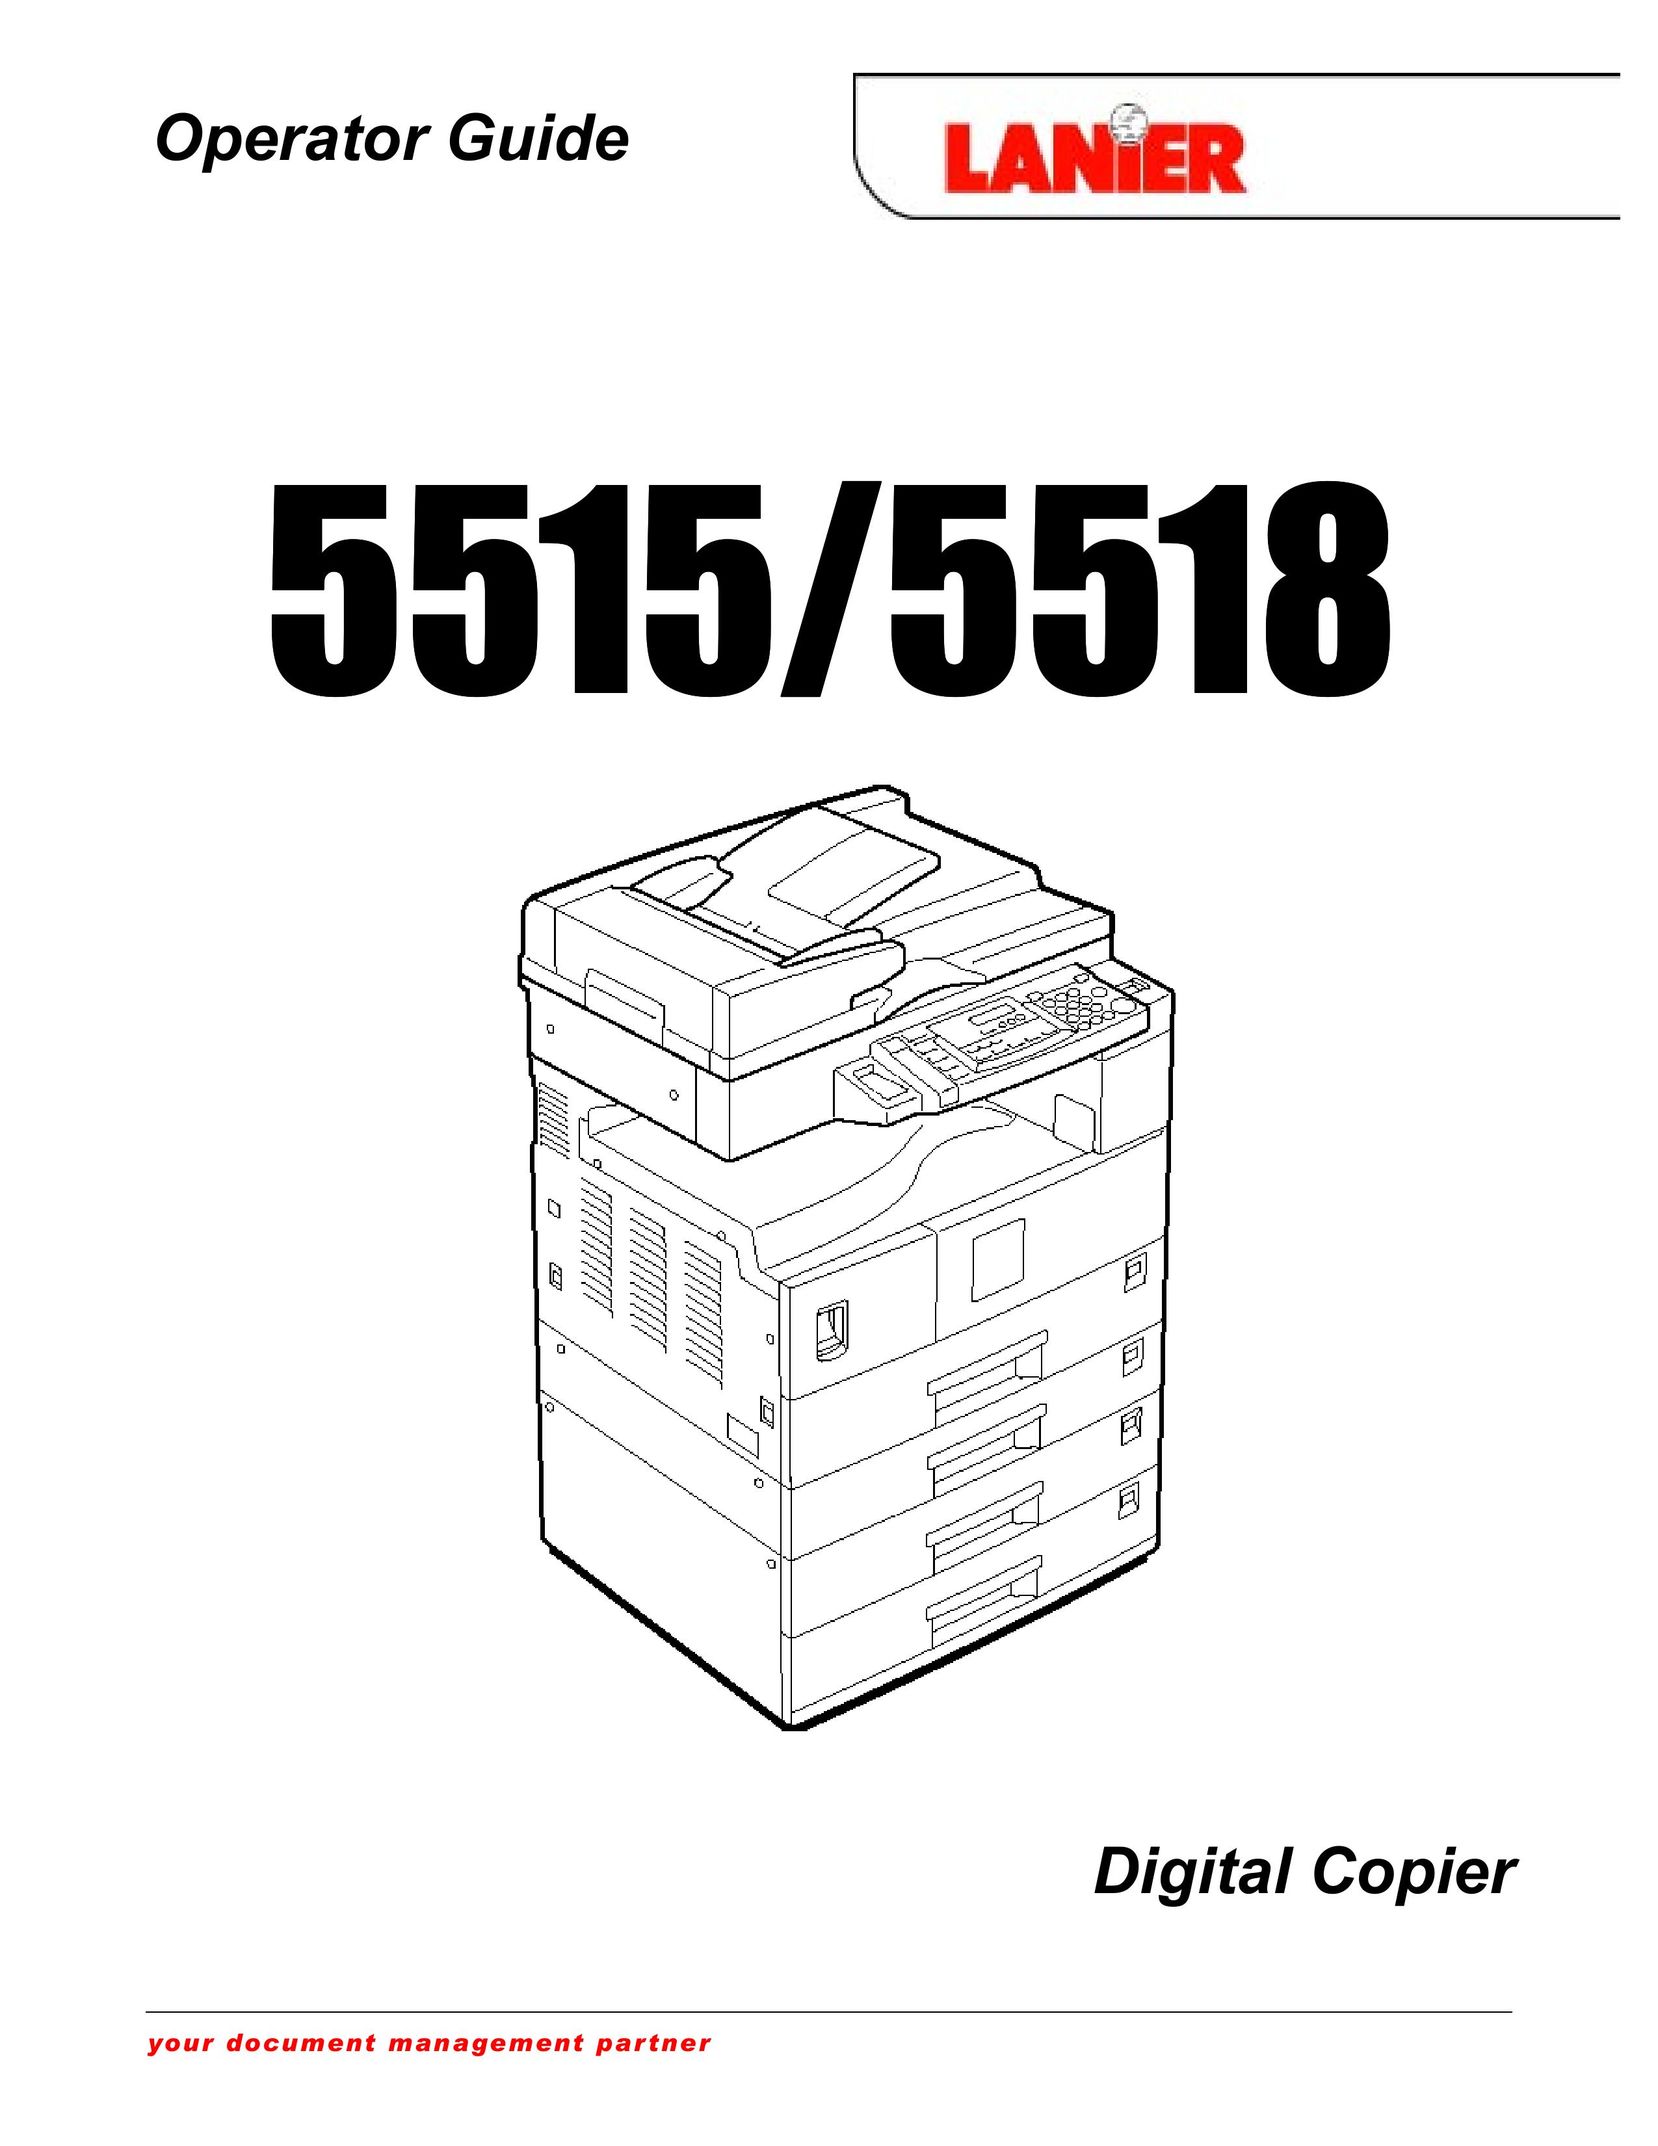 Lanier 5518 All in One Printer User Manual